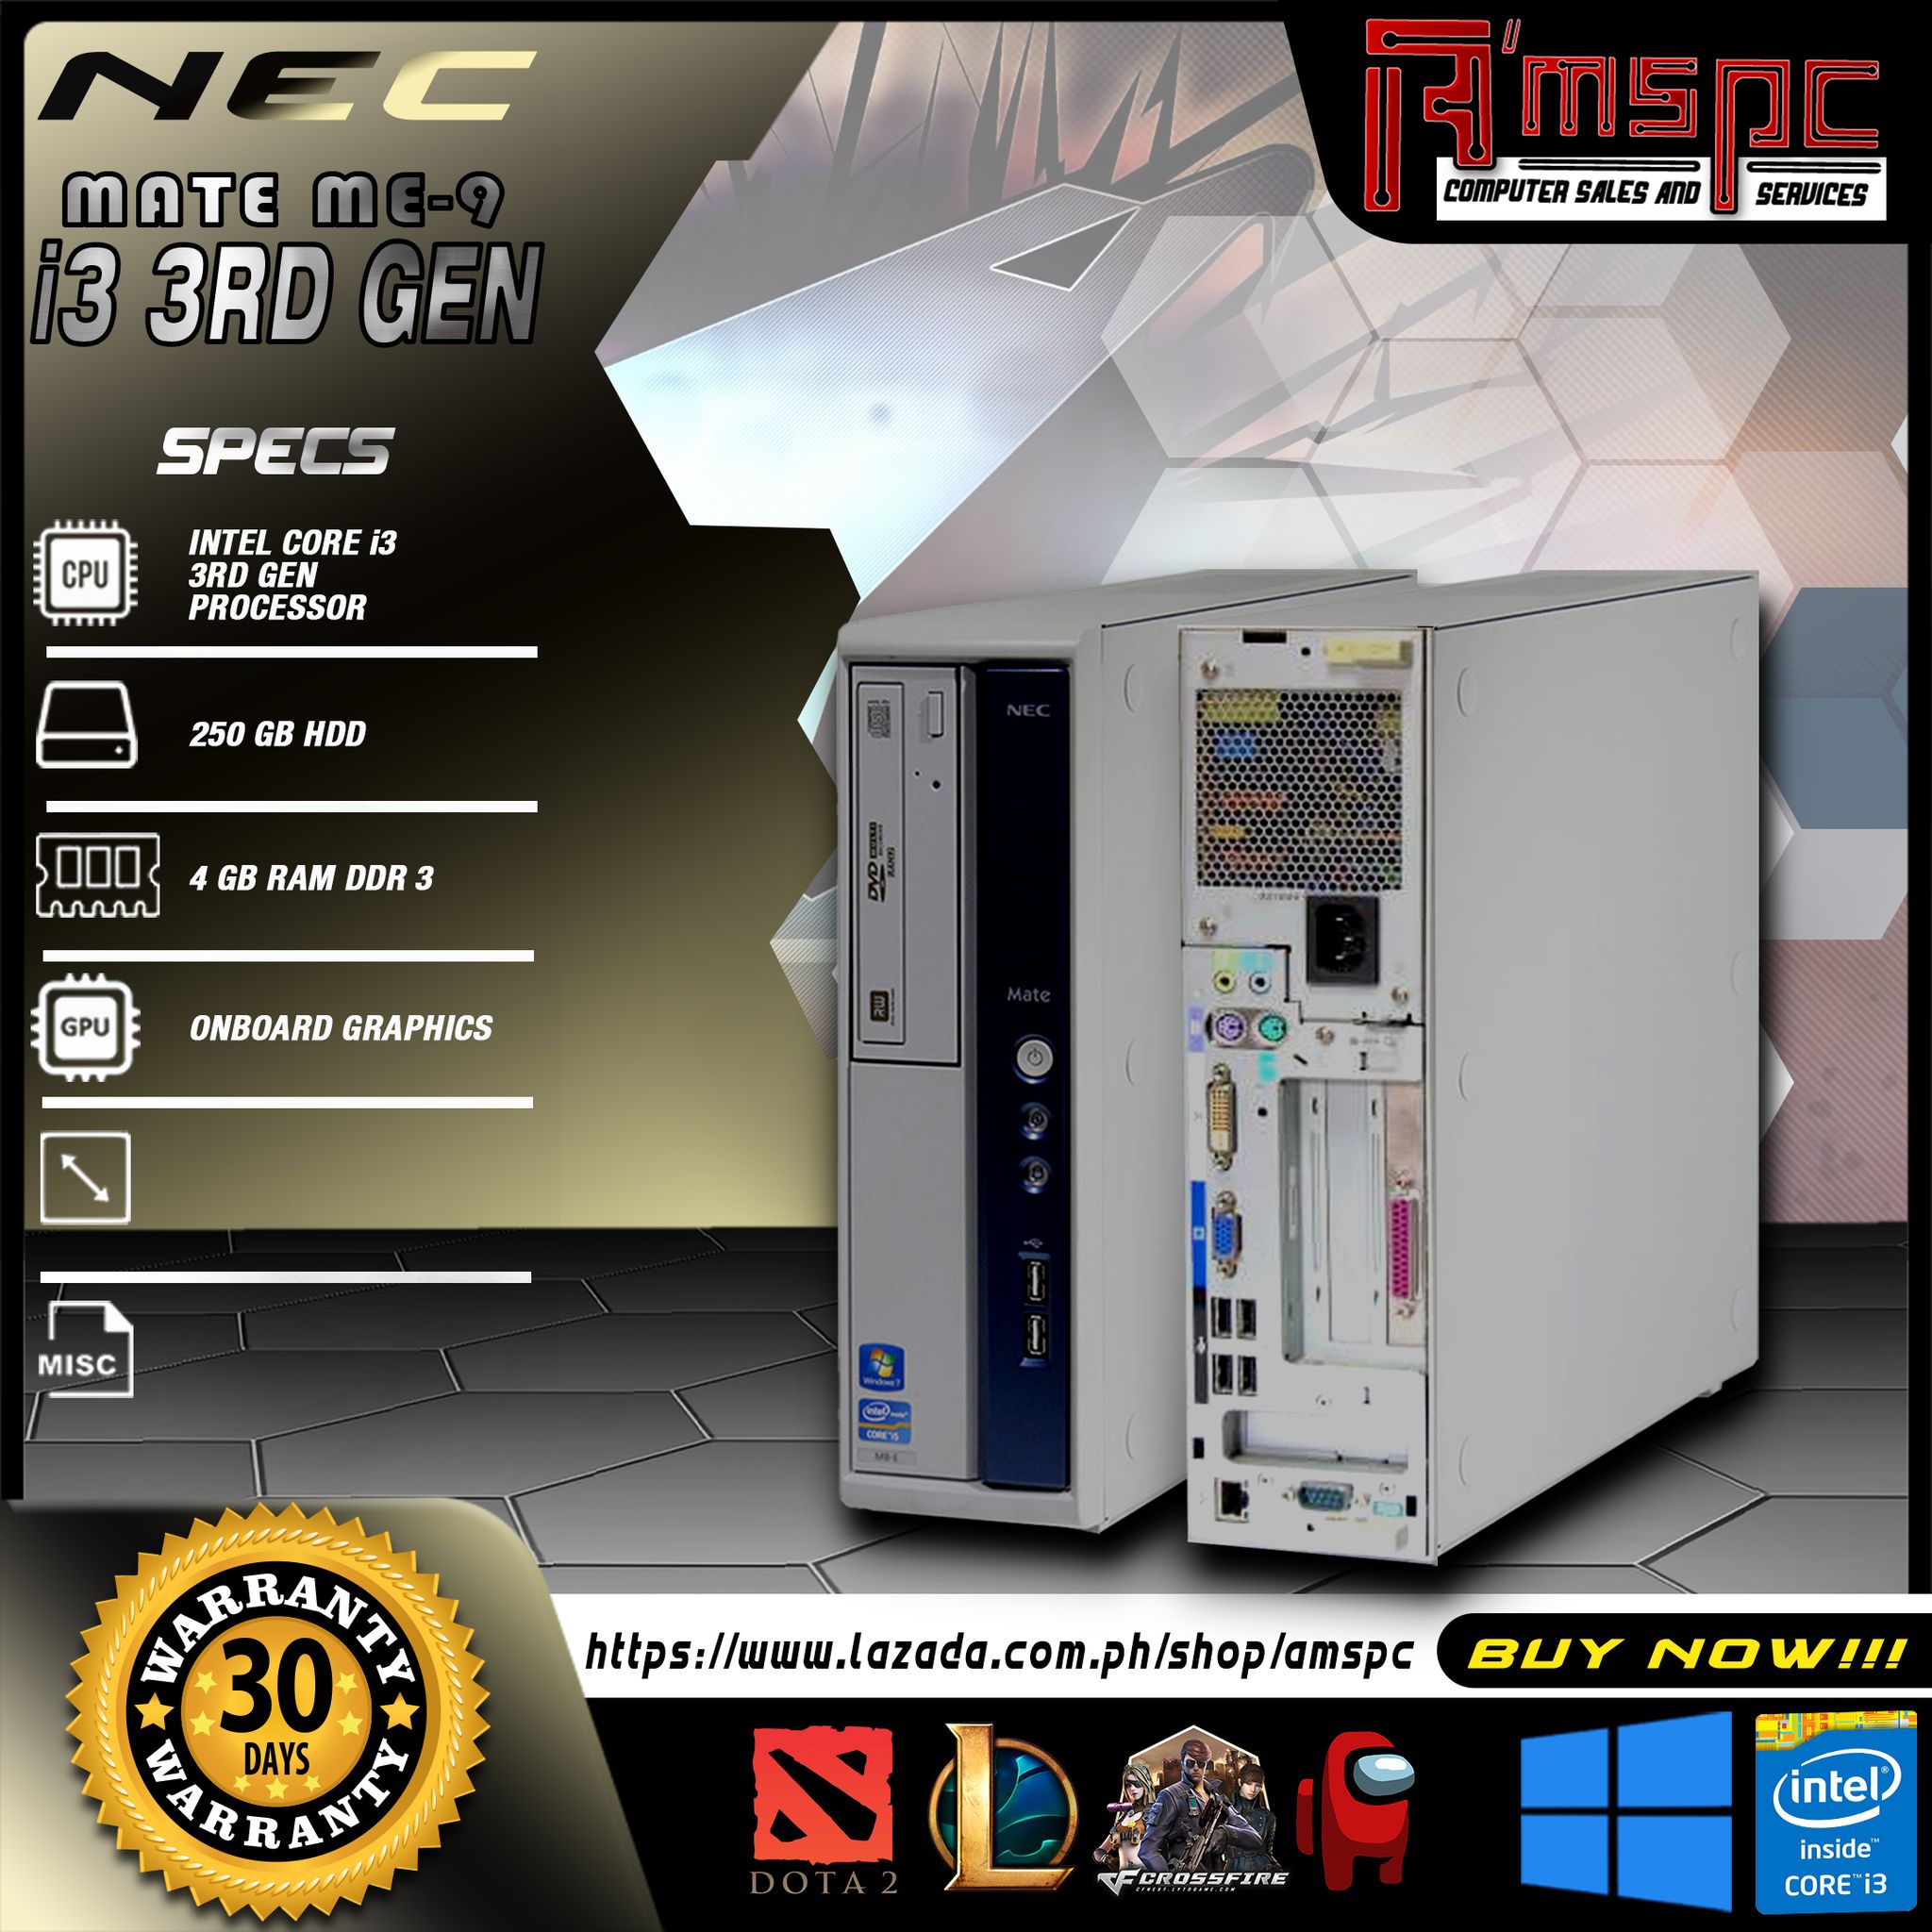 NEC MATE ME-9|INTEL CORE i3 3RD GEN PROCESSOR|250GB HDD|4GB RAM